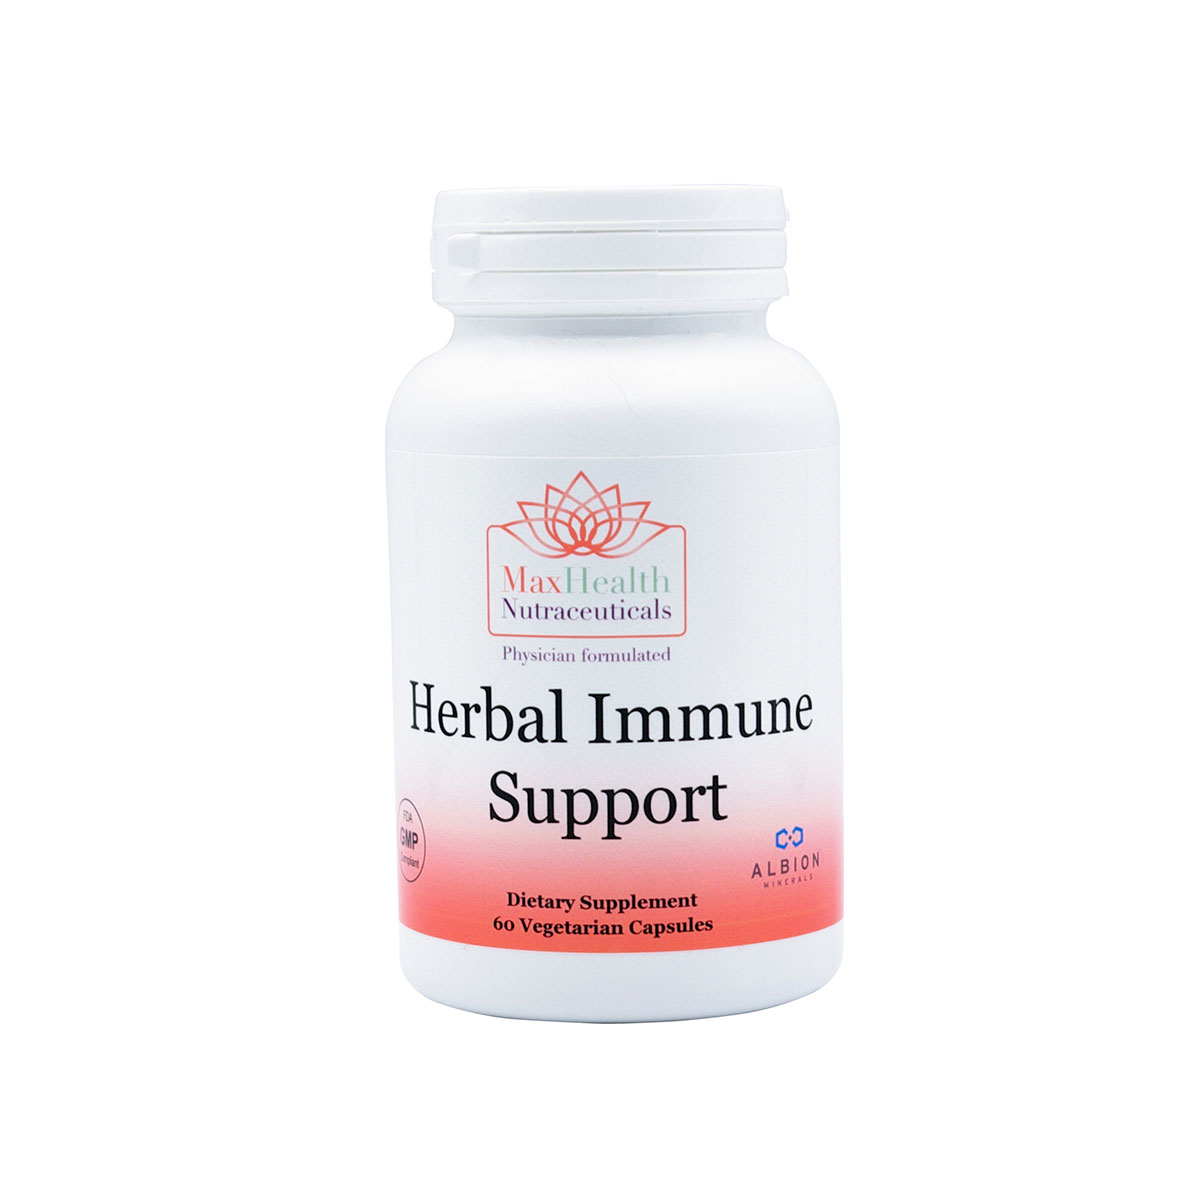 11Herbal Immune Support